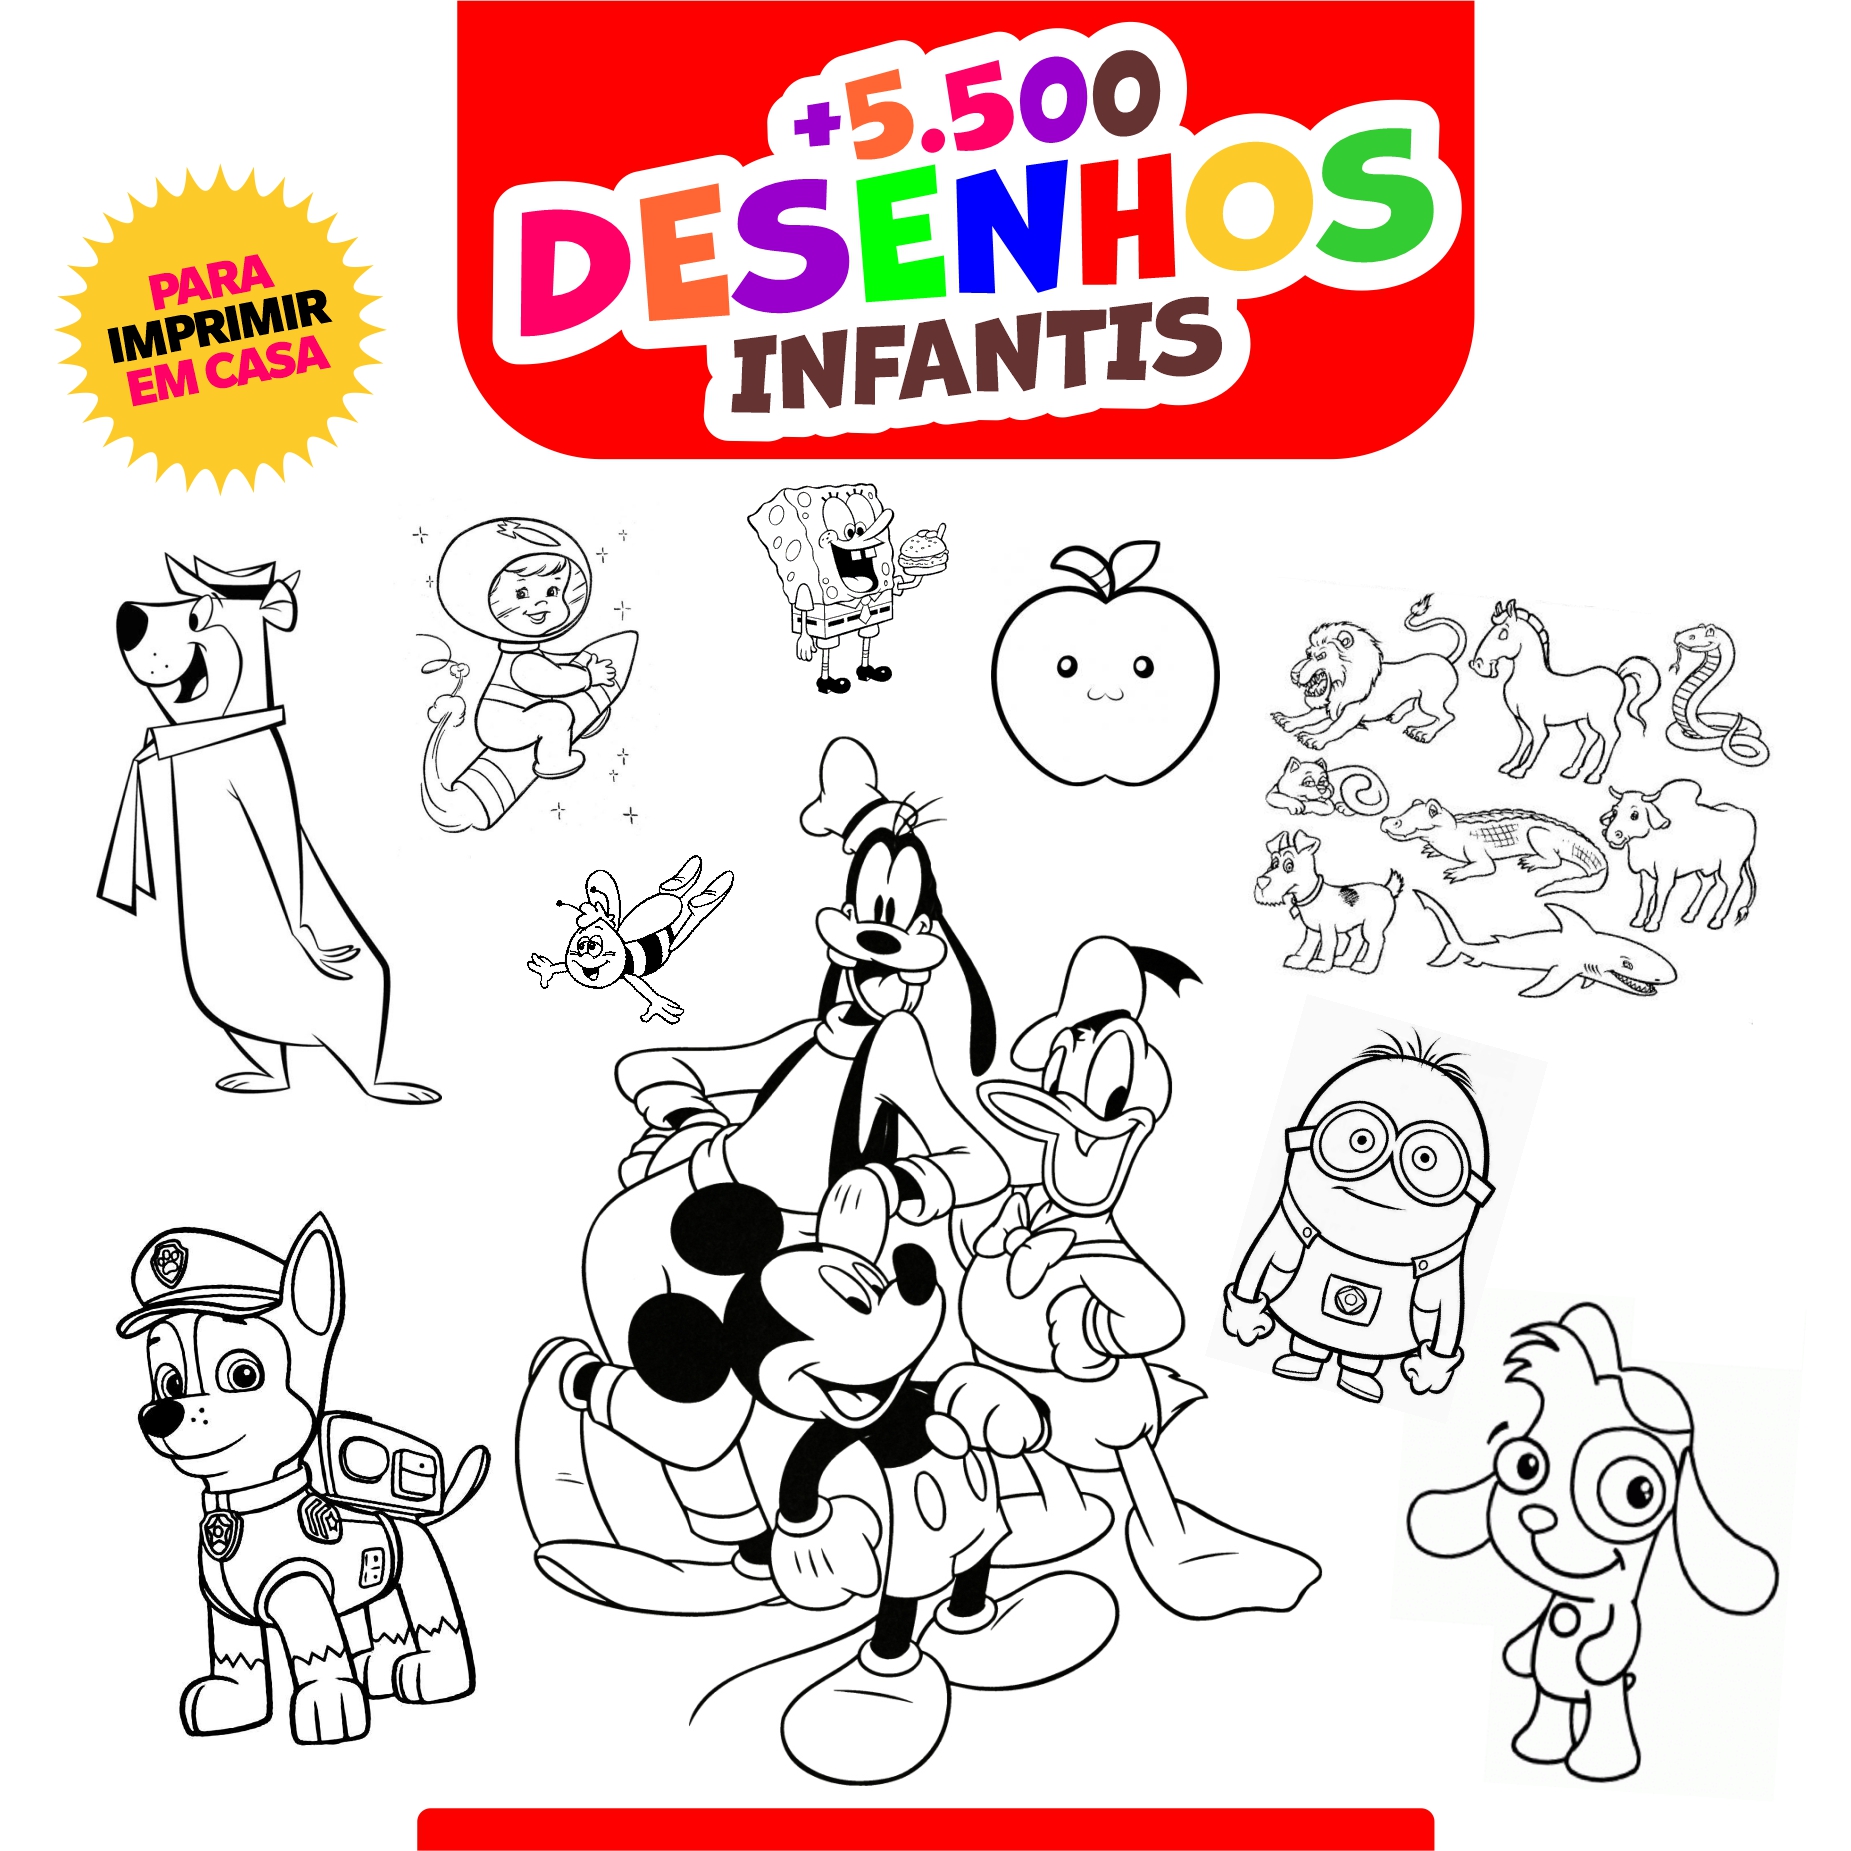 Desenhos infantis para colorir